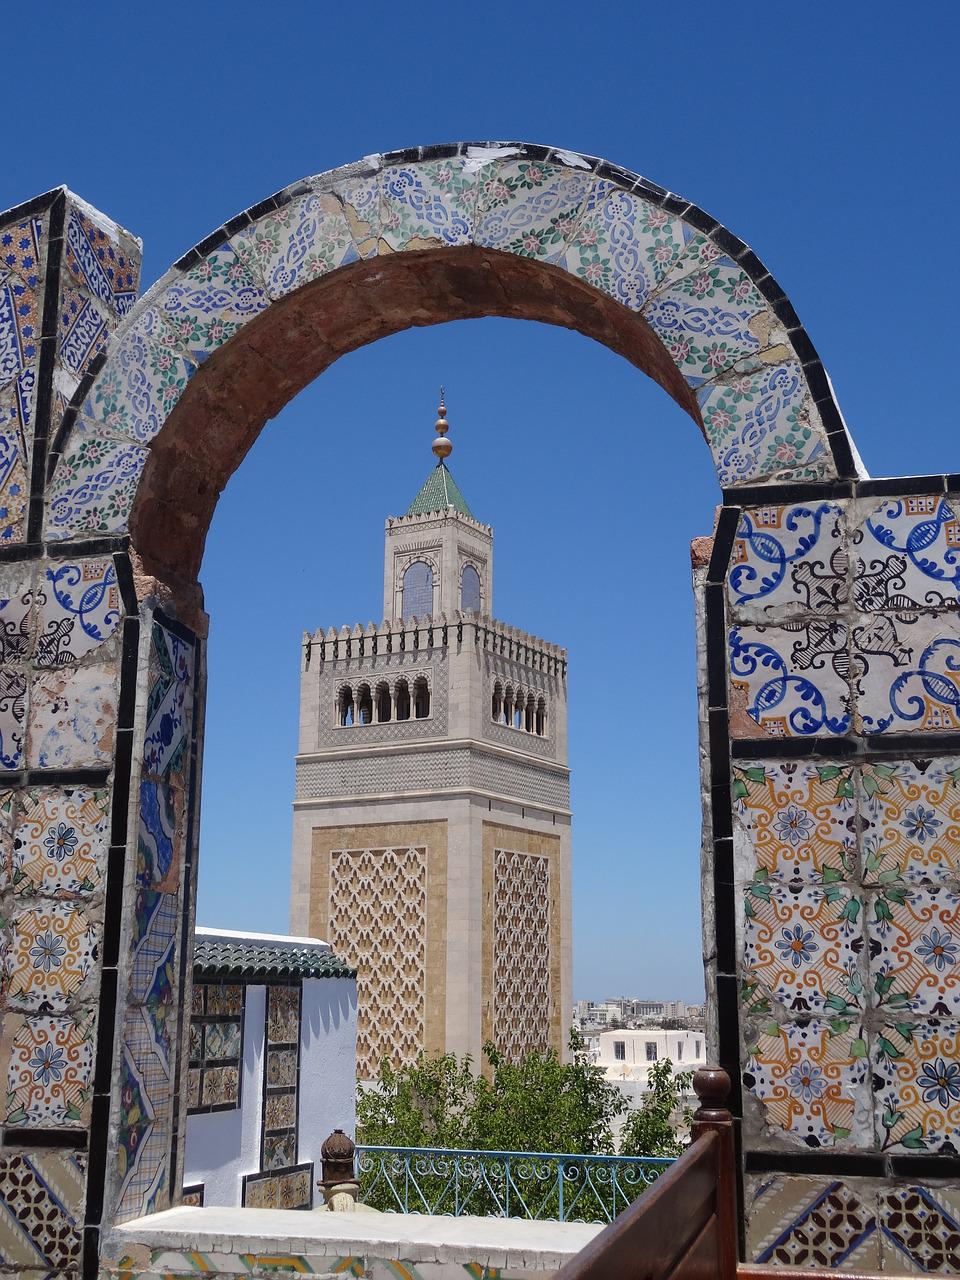 The Medina of Tunis Mosque